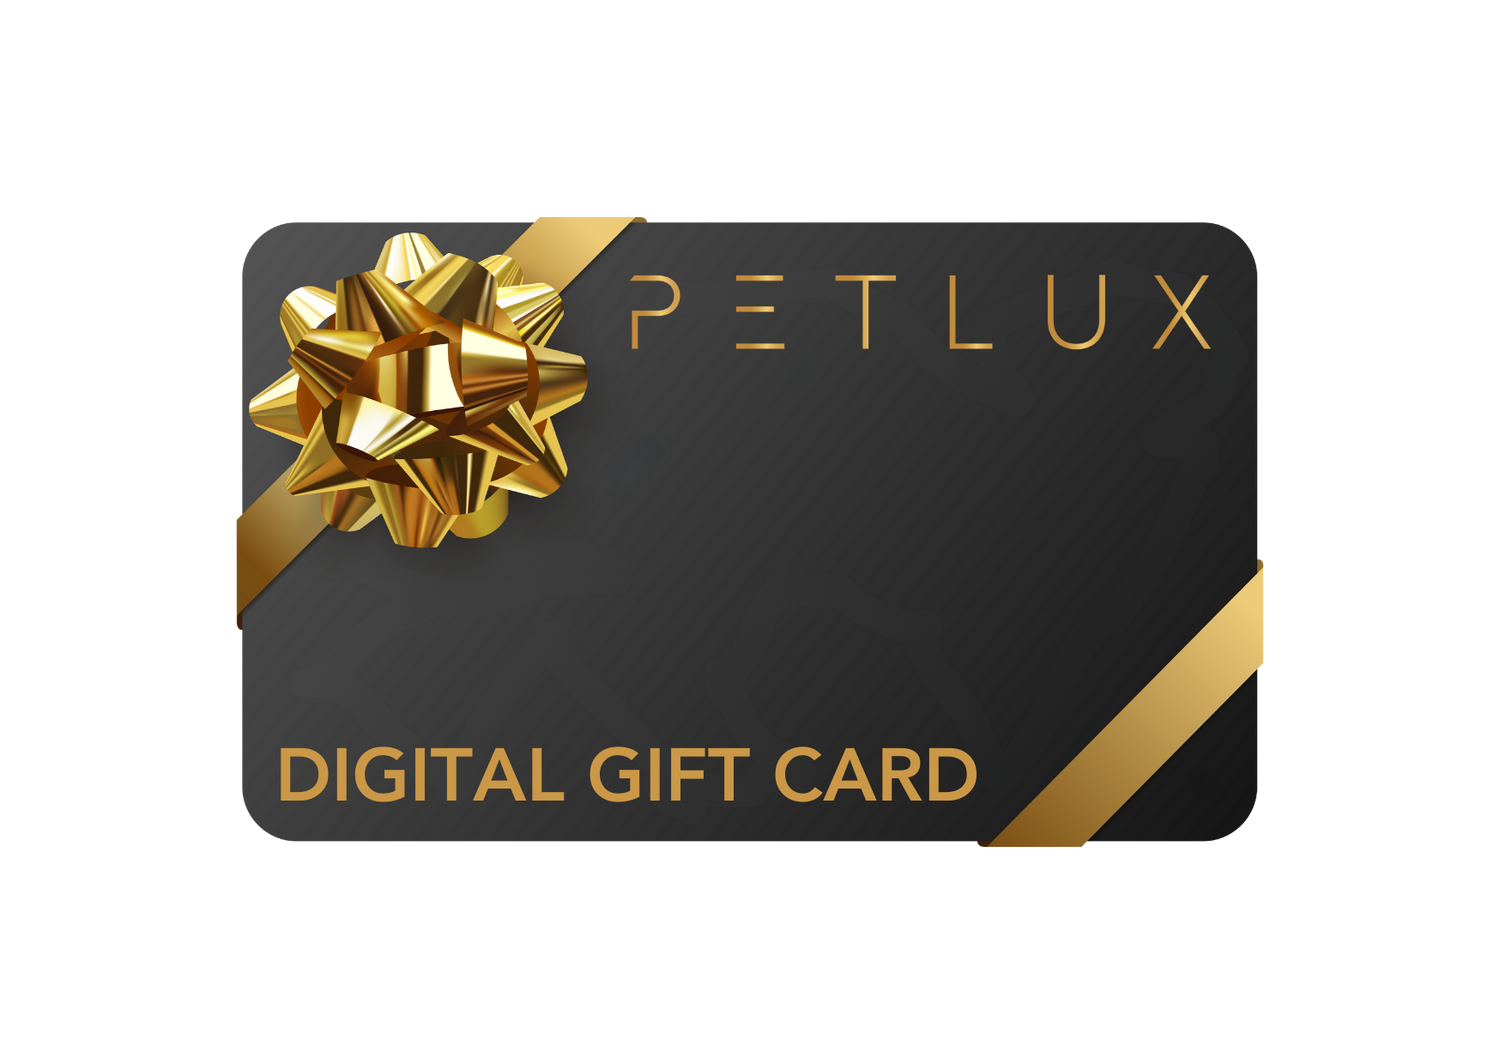 Digital gift voucher - PETLUX